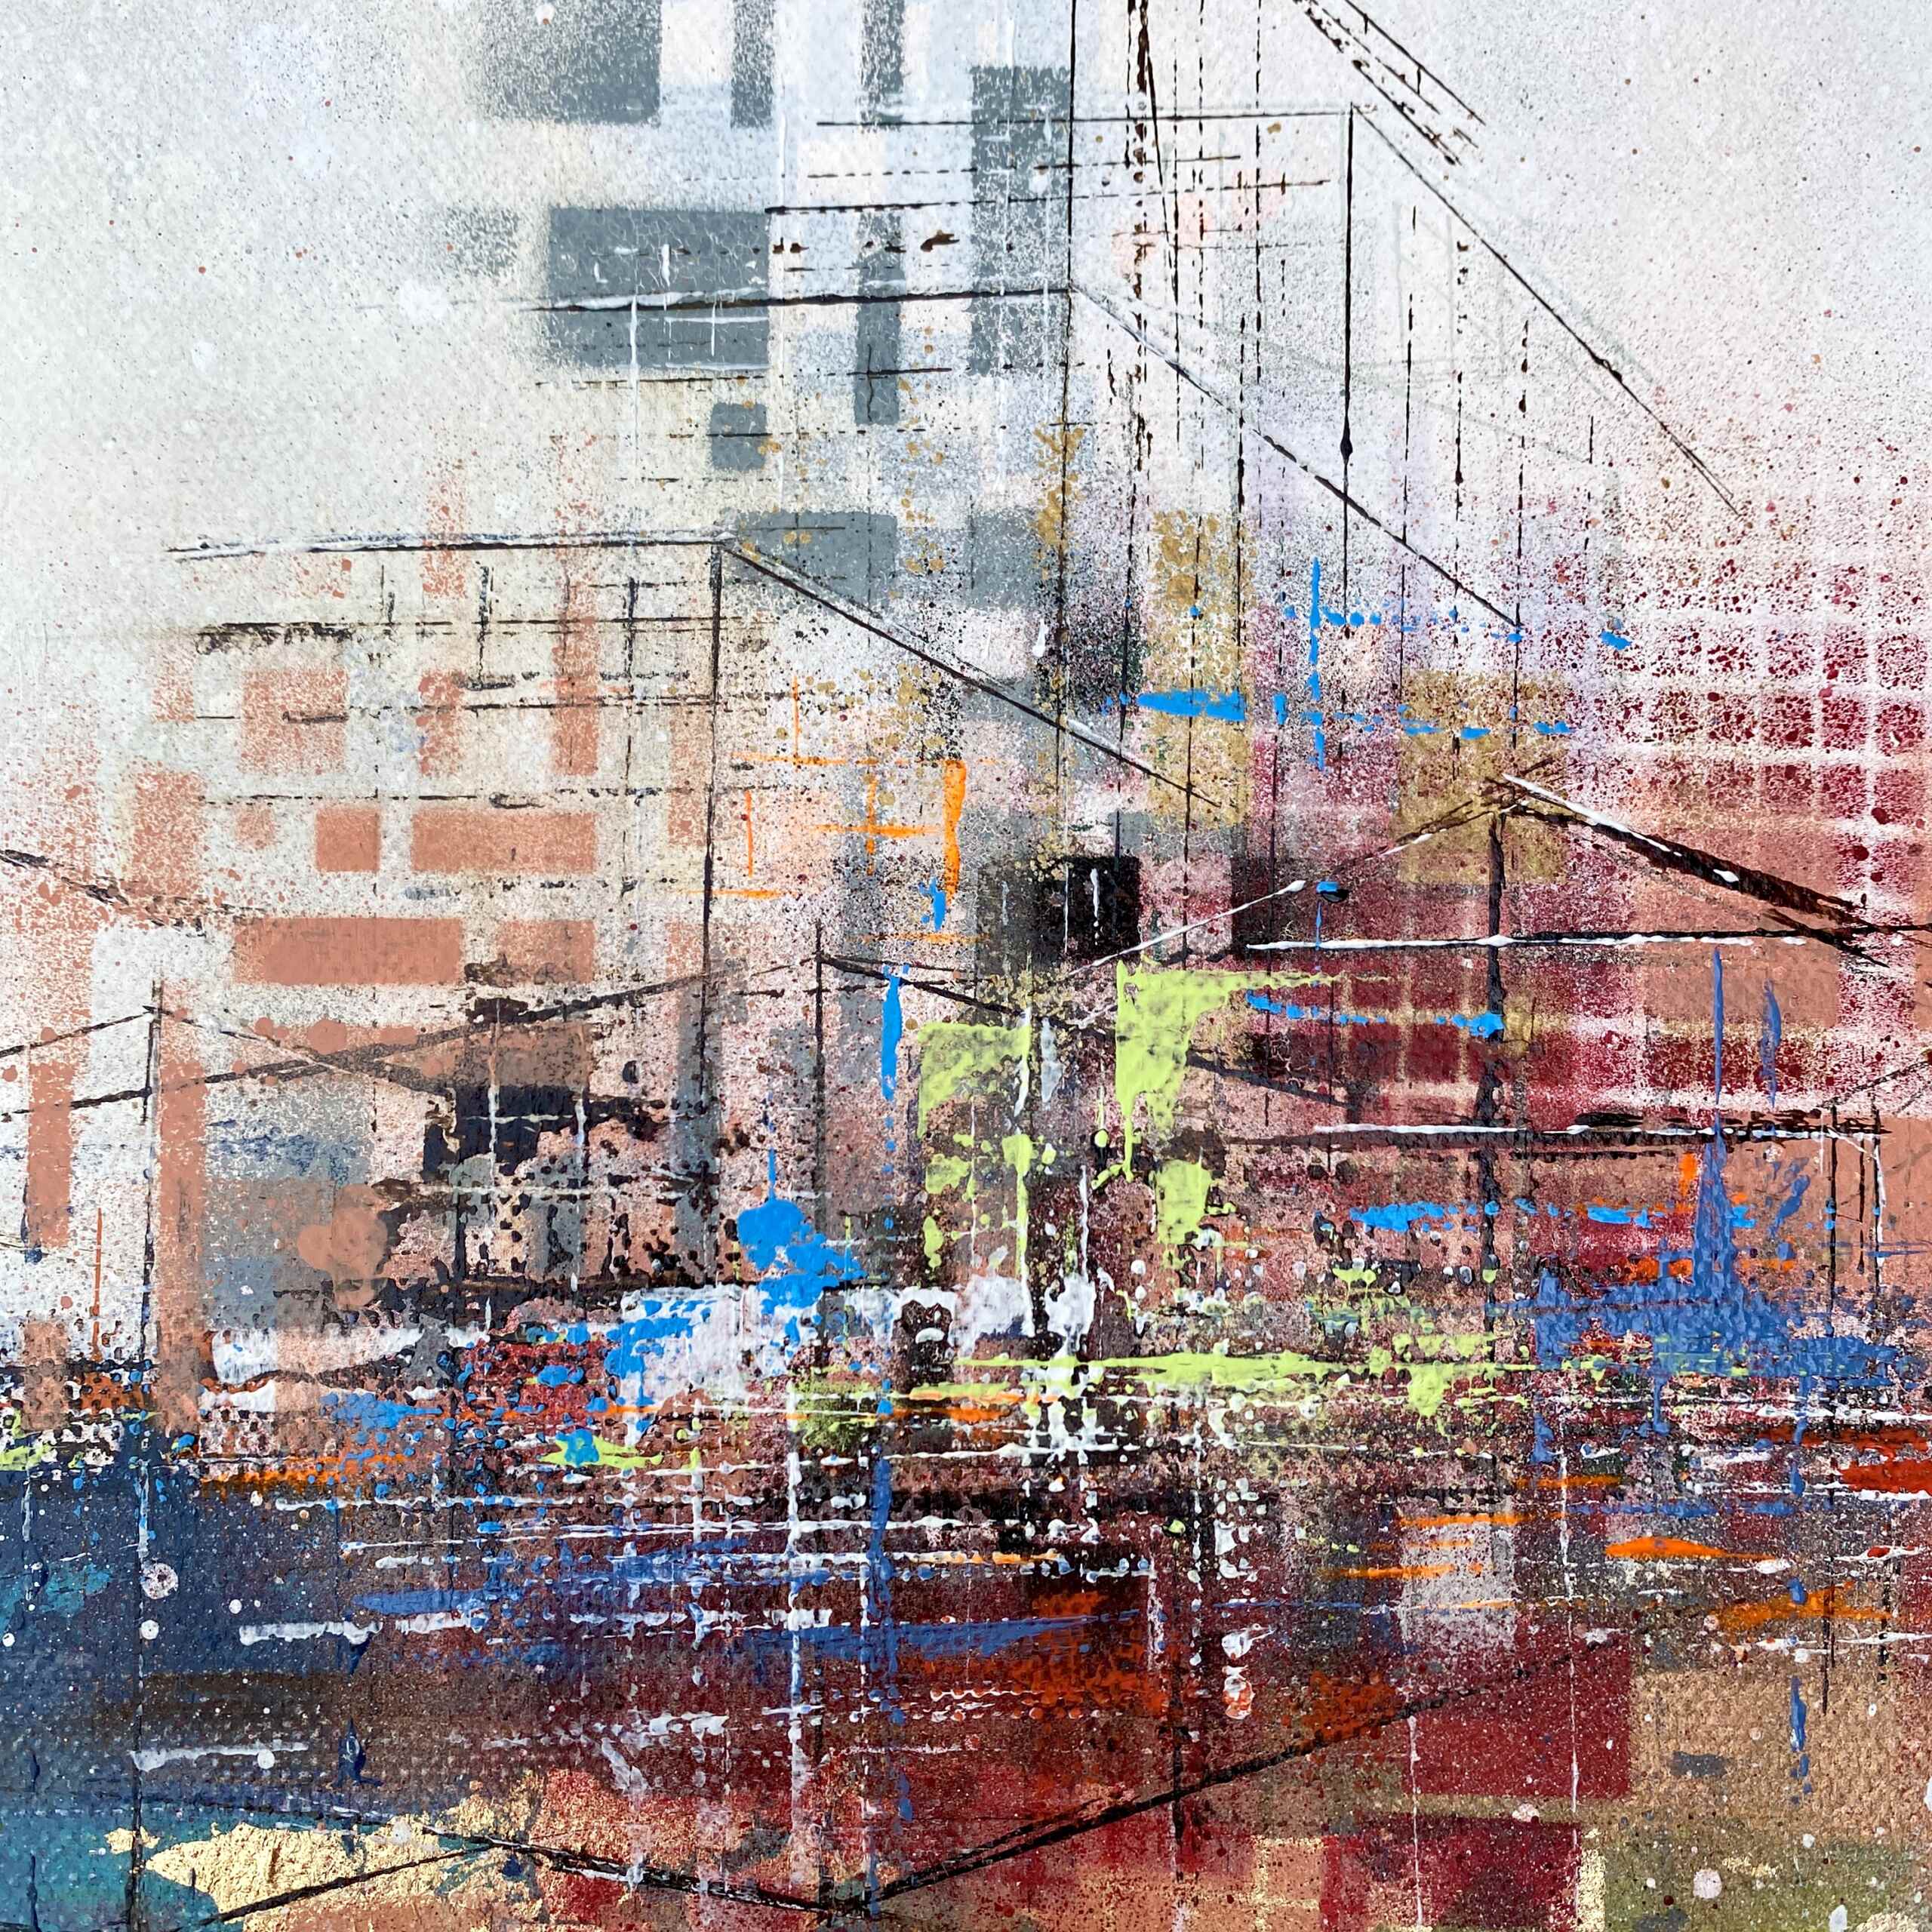 Detail of artwork "City Calling No 1" by Nina Groth